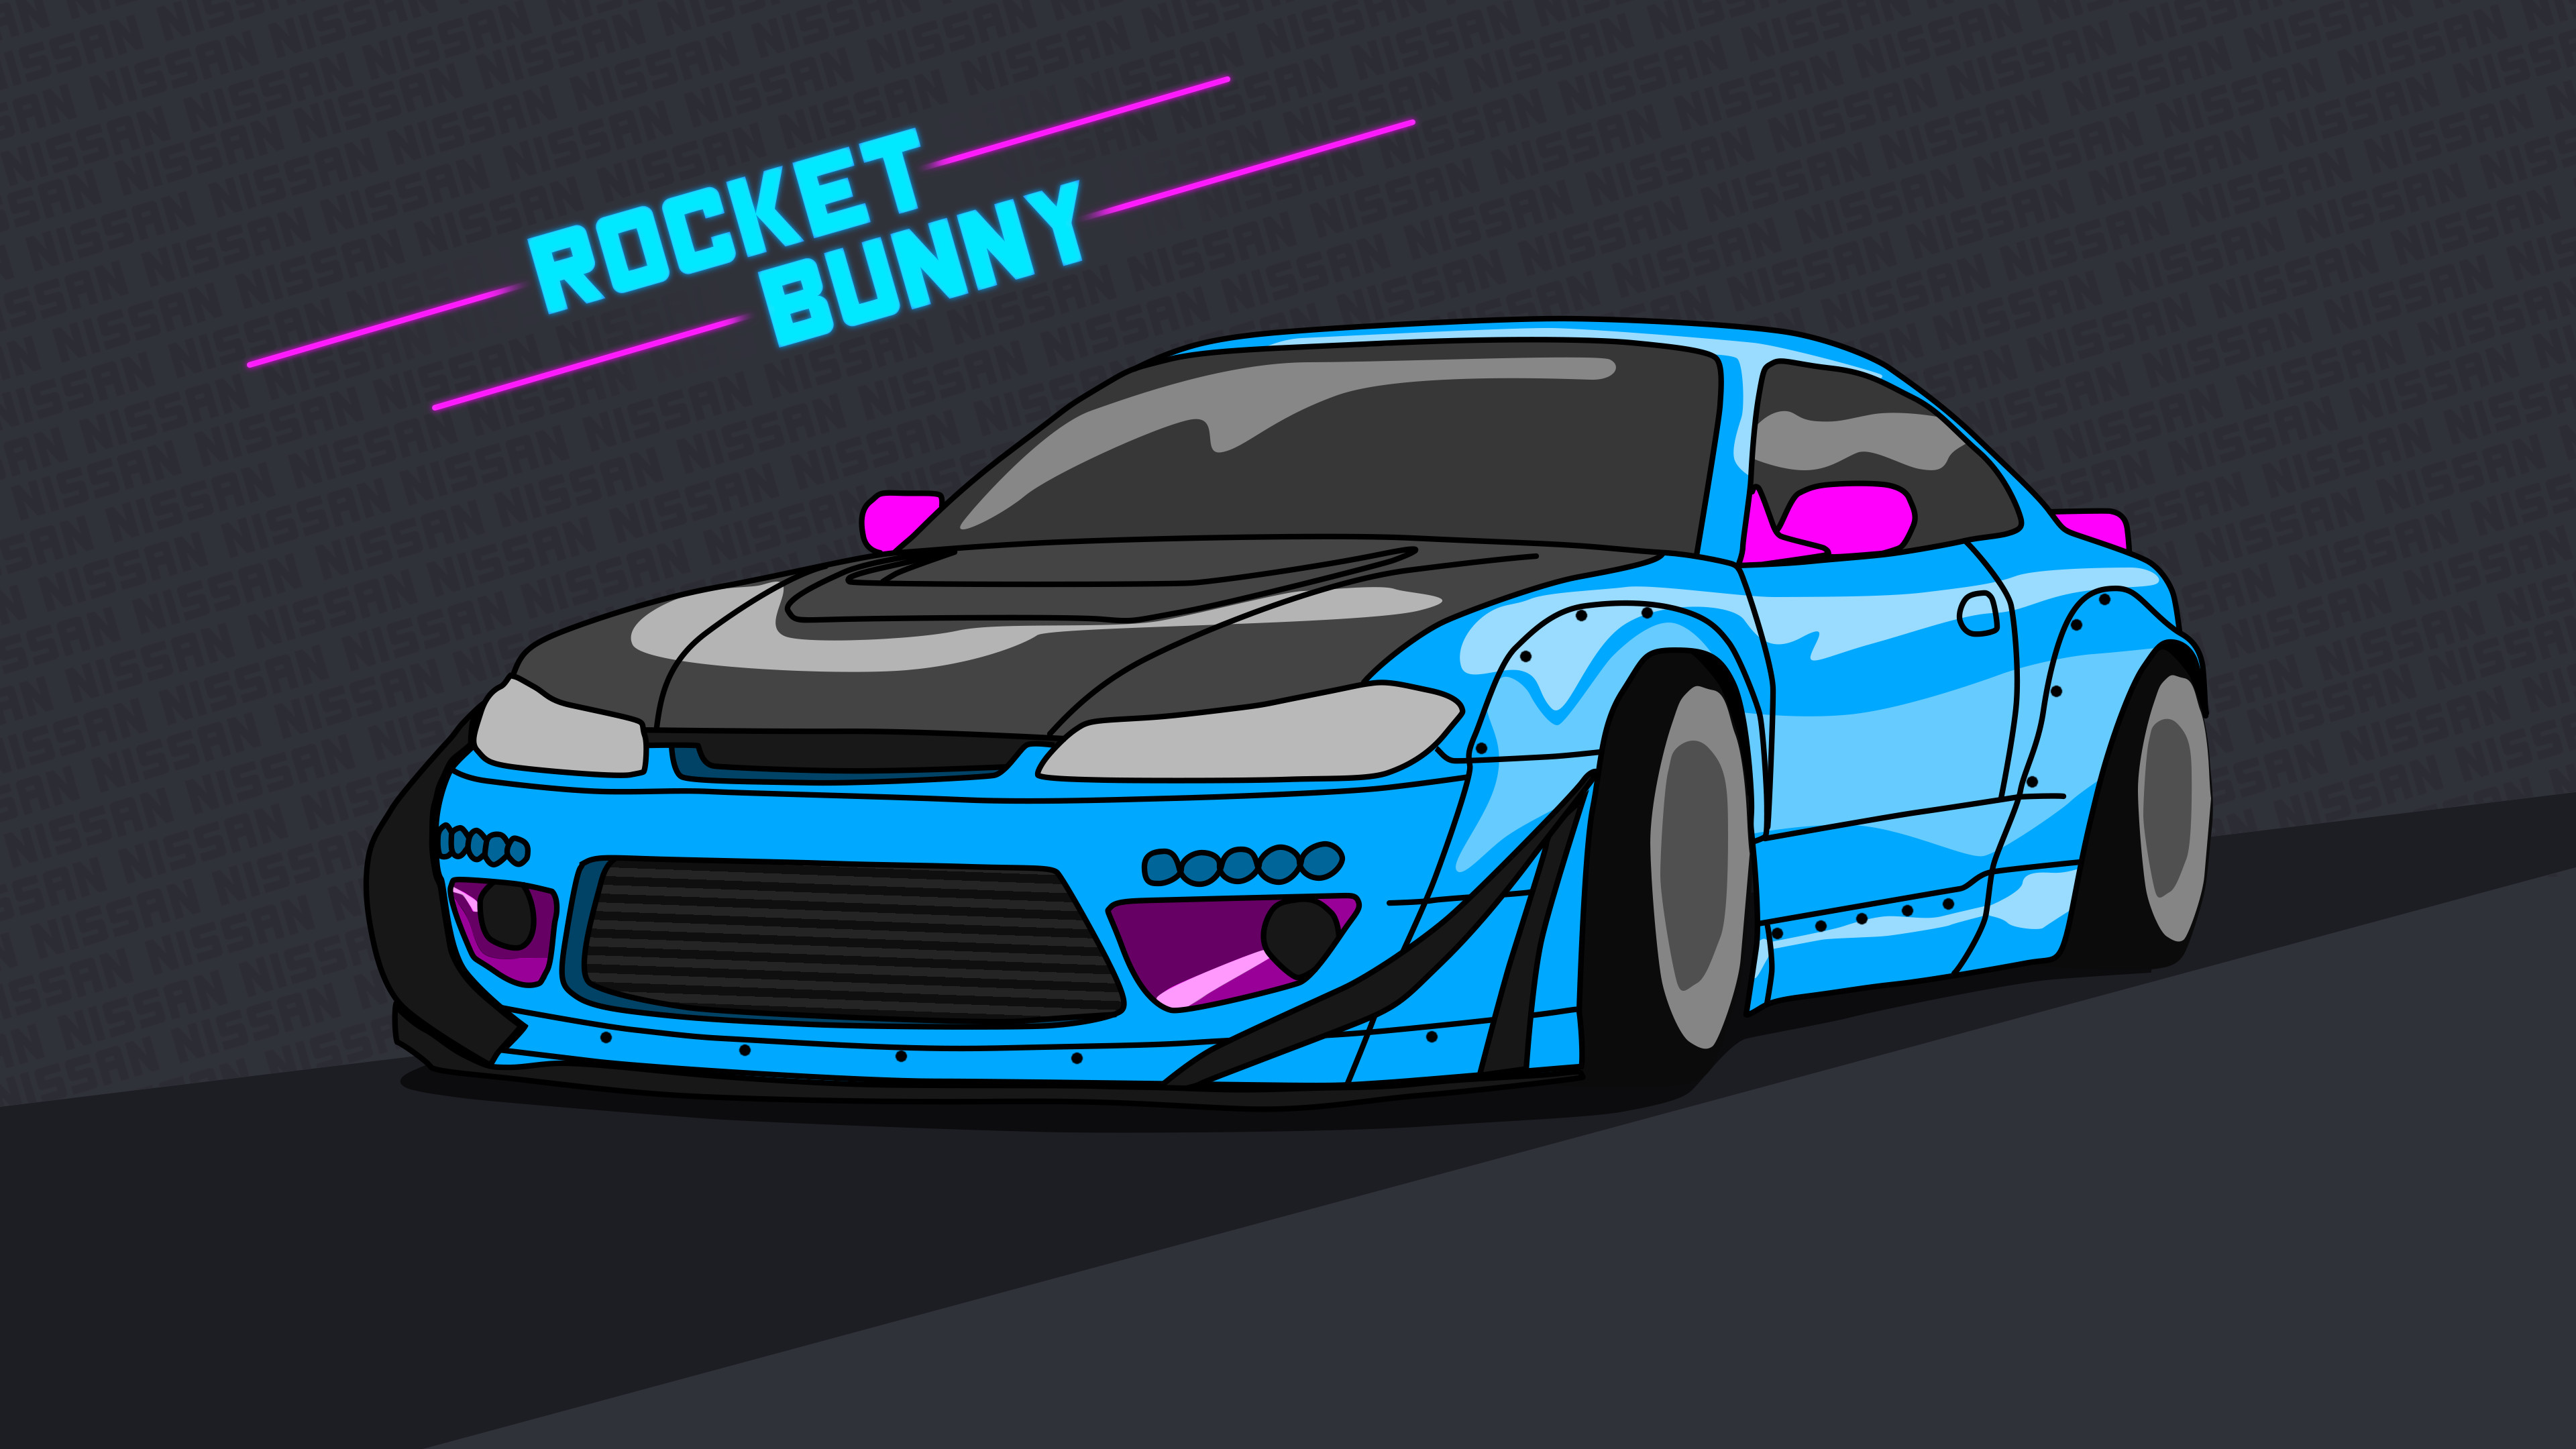 3840x2160 ... Nissan Silvia S15 wallpaper 4k rocket bunny Neon by ItsBarney01